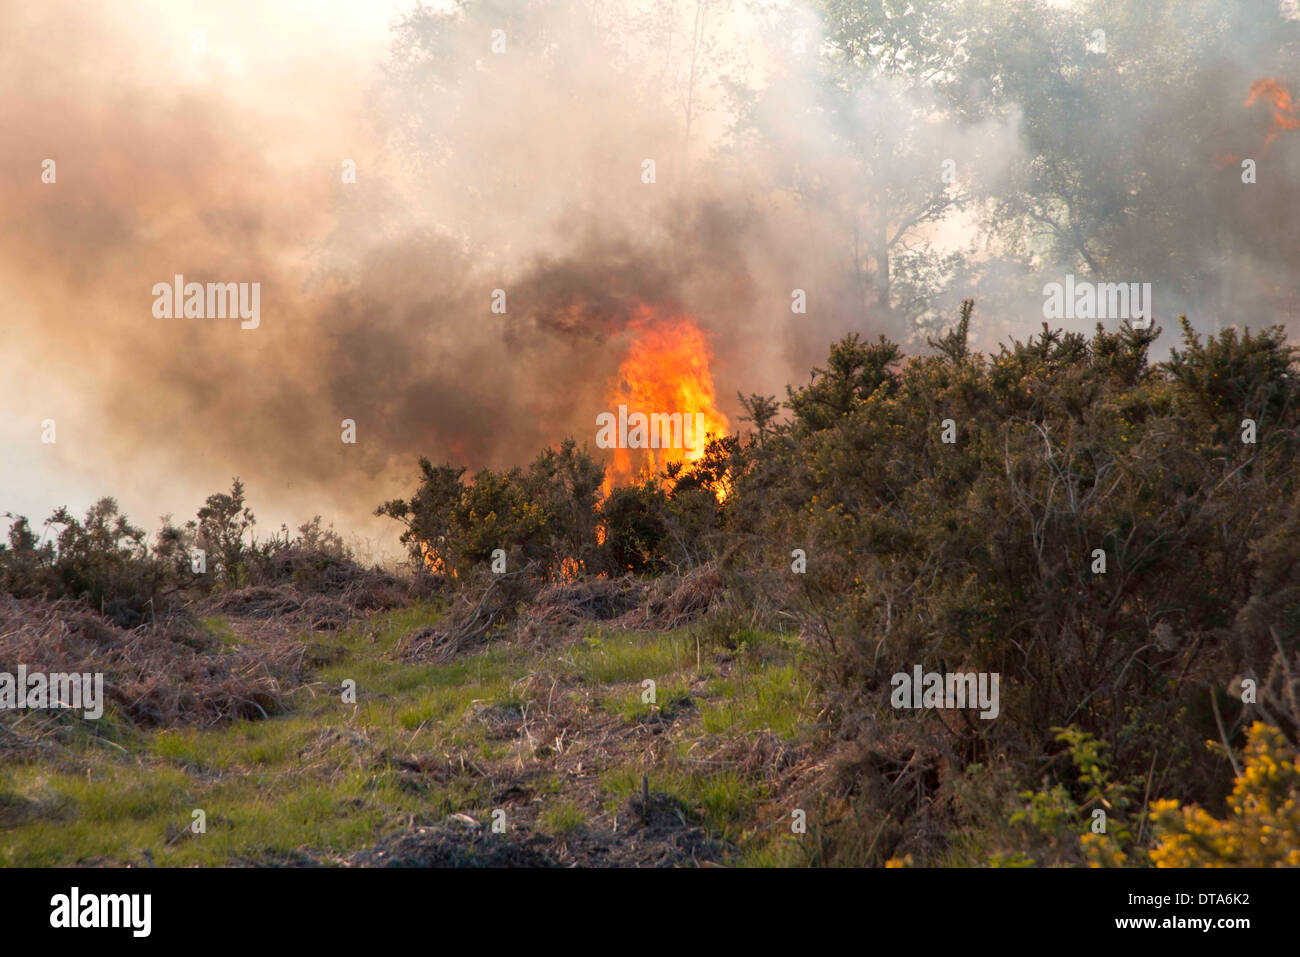 heathland fire well underway, with burning gorse, bracken and grass and spreading. Stock Photo